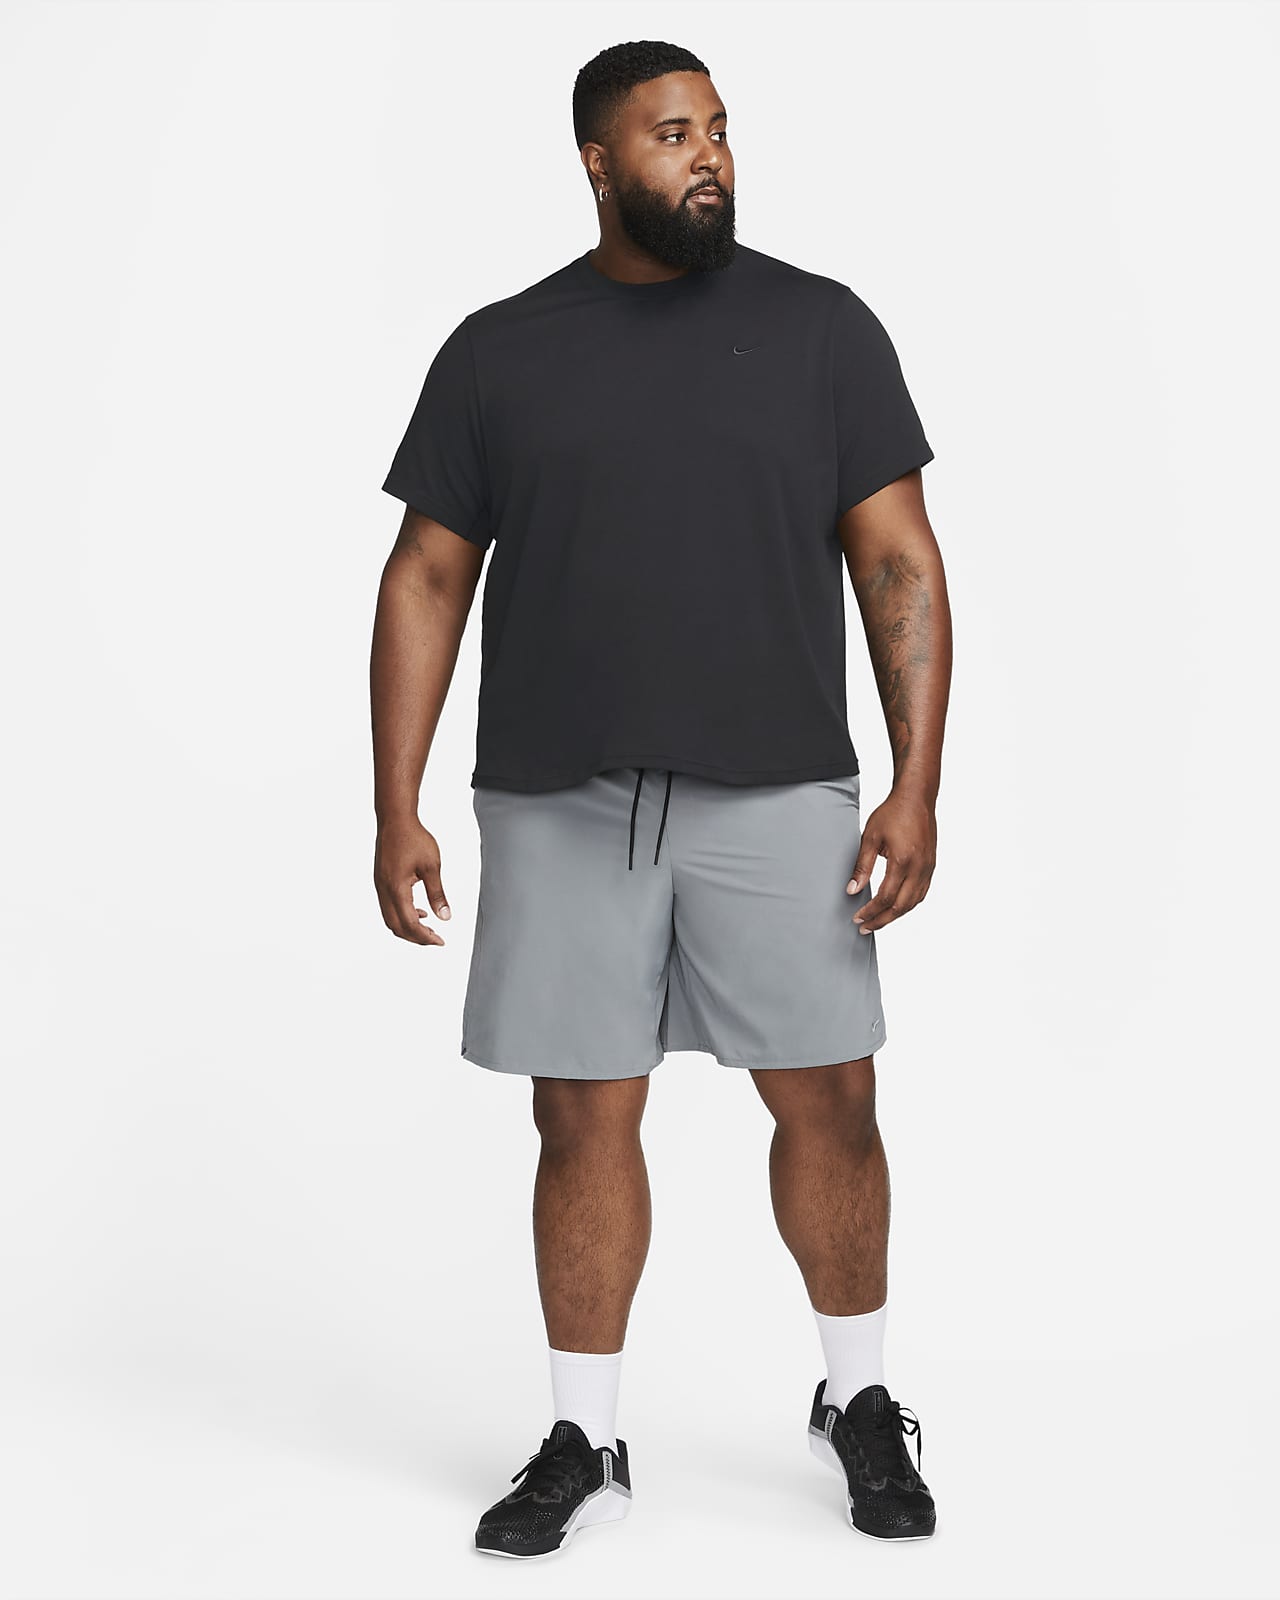 Nike Dri-fit Short-sleeve Yoga Training Top in White for Men